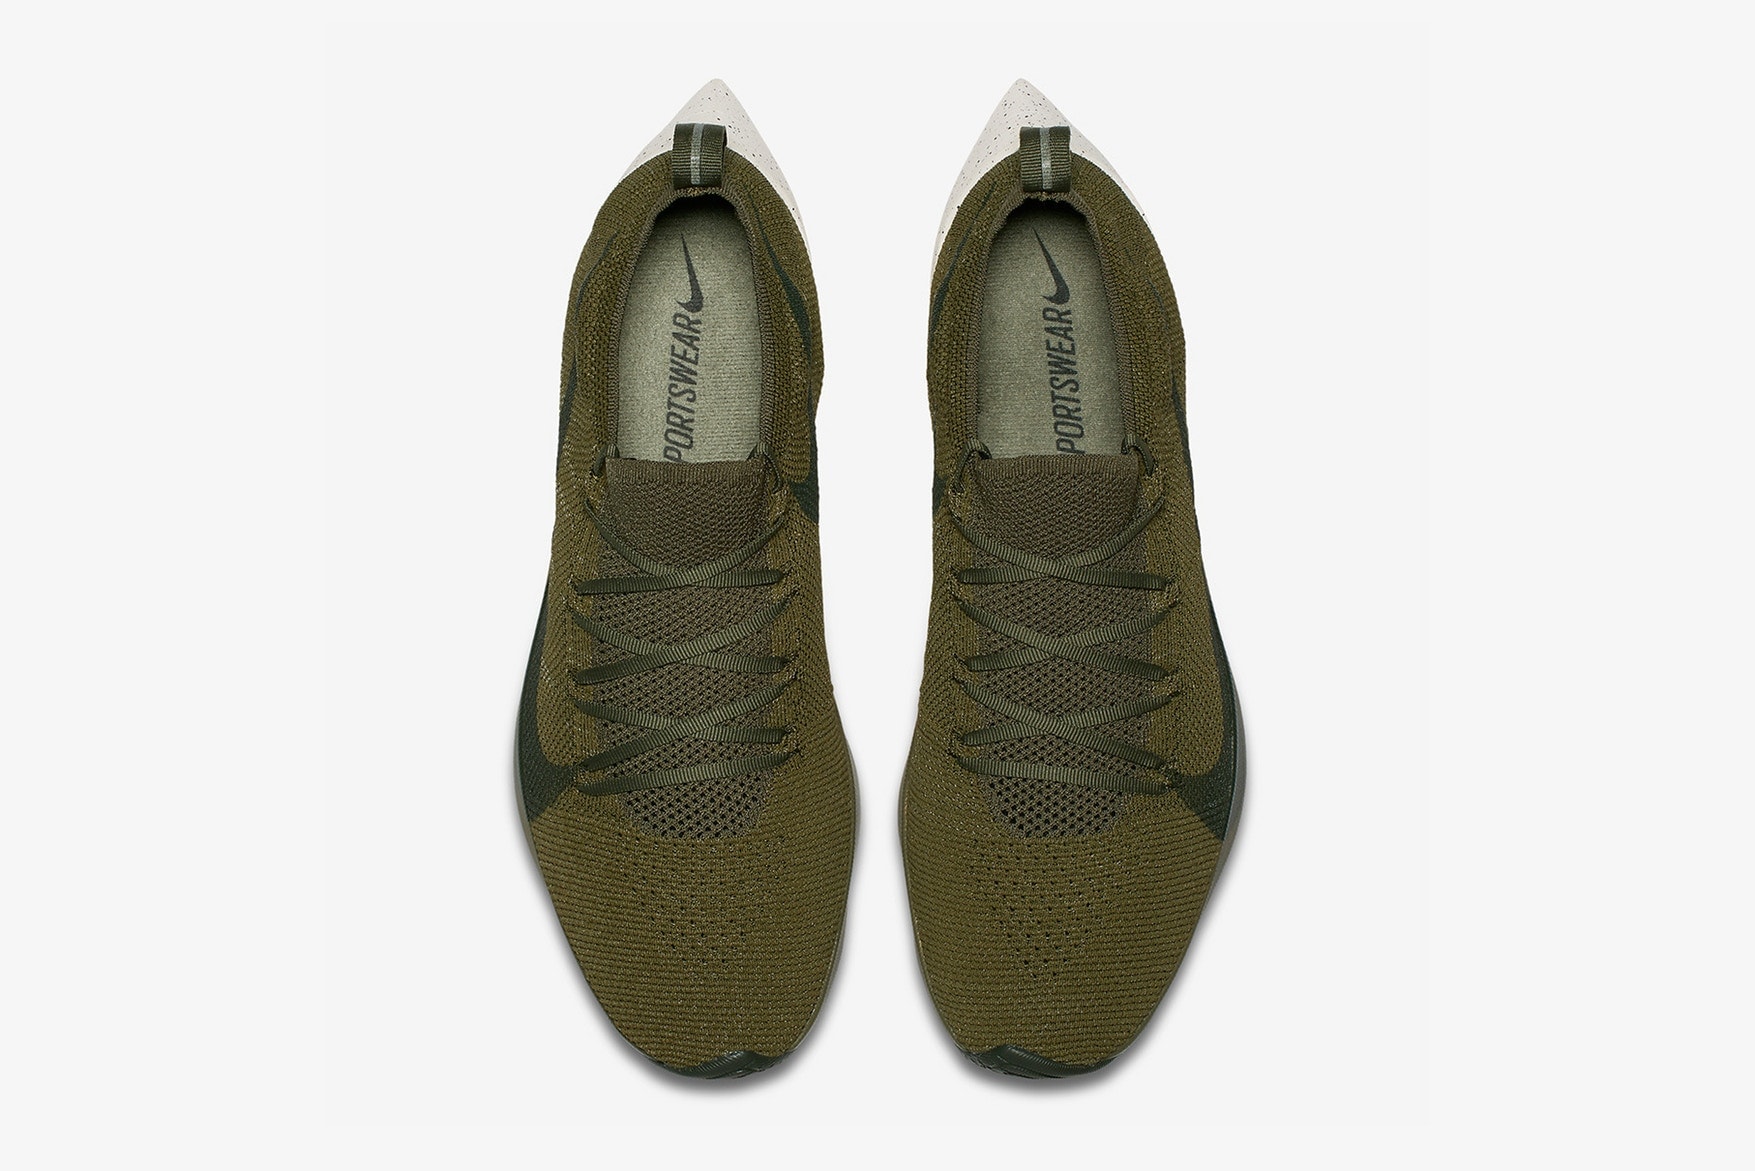 Nike Vapor Street Flyknit 全新「Off-White」&「Olive Green」配色即將上架